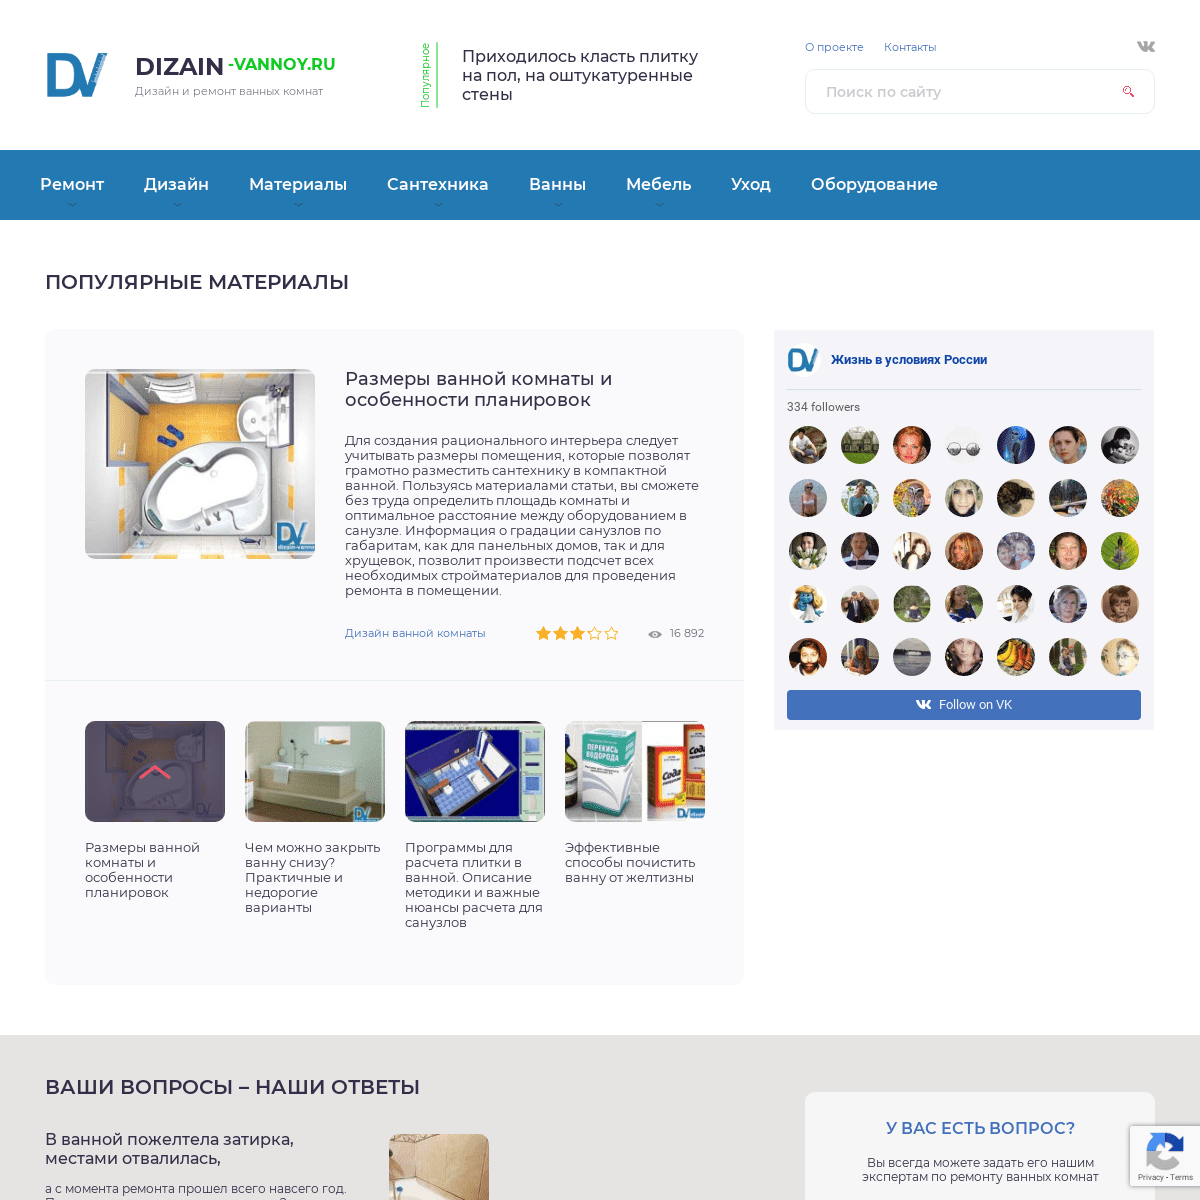 A complete backup of dizain-vannoy.ru